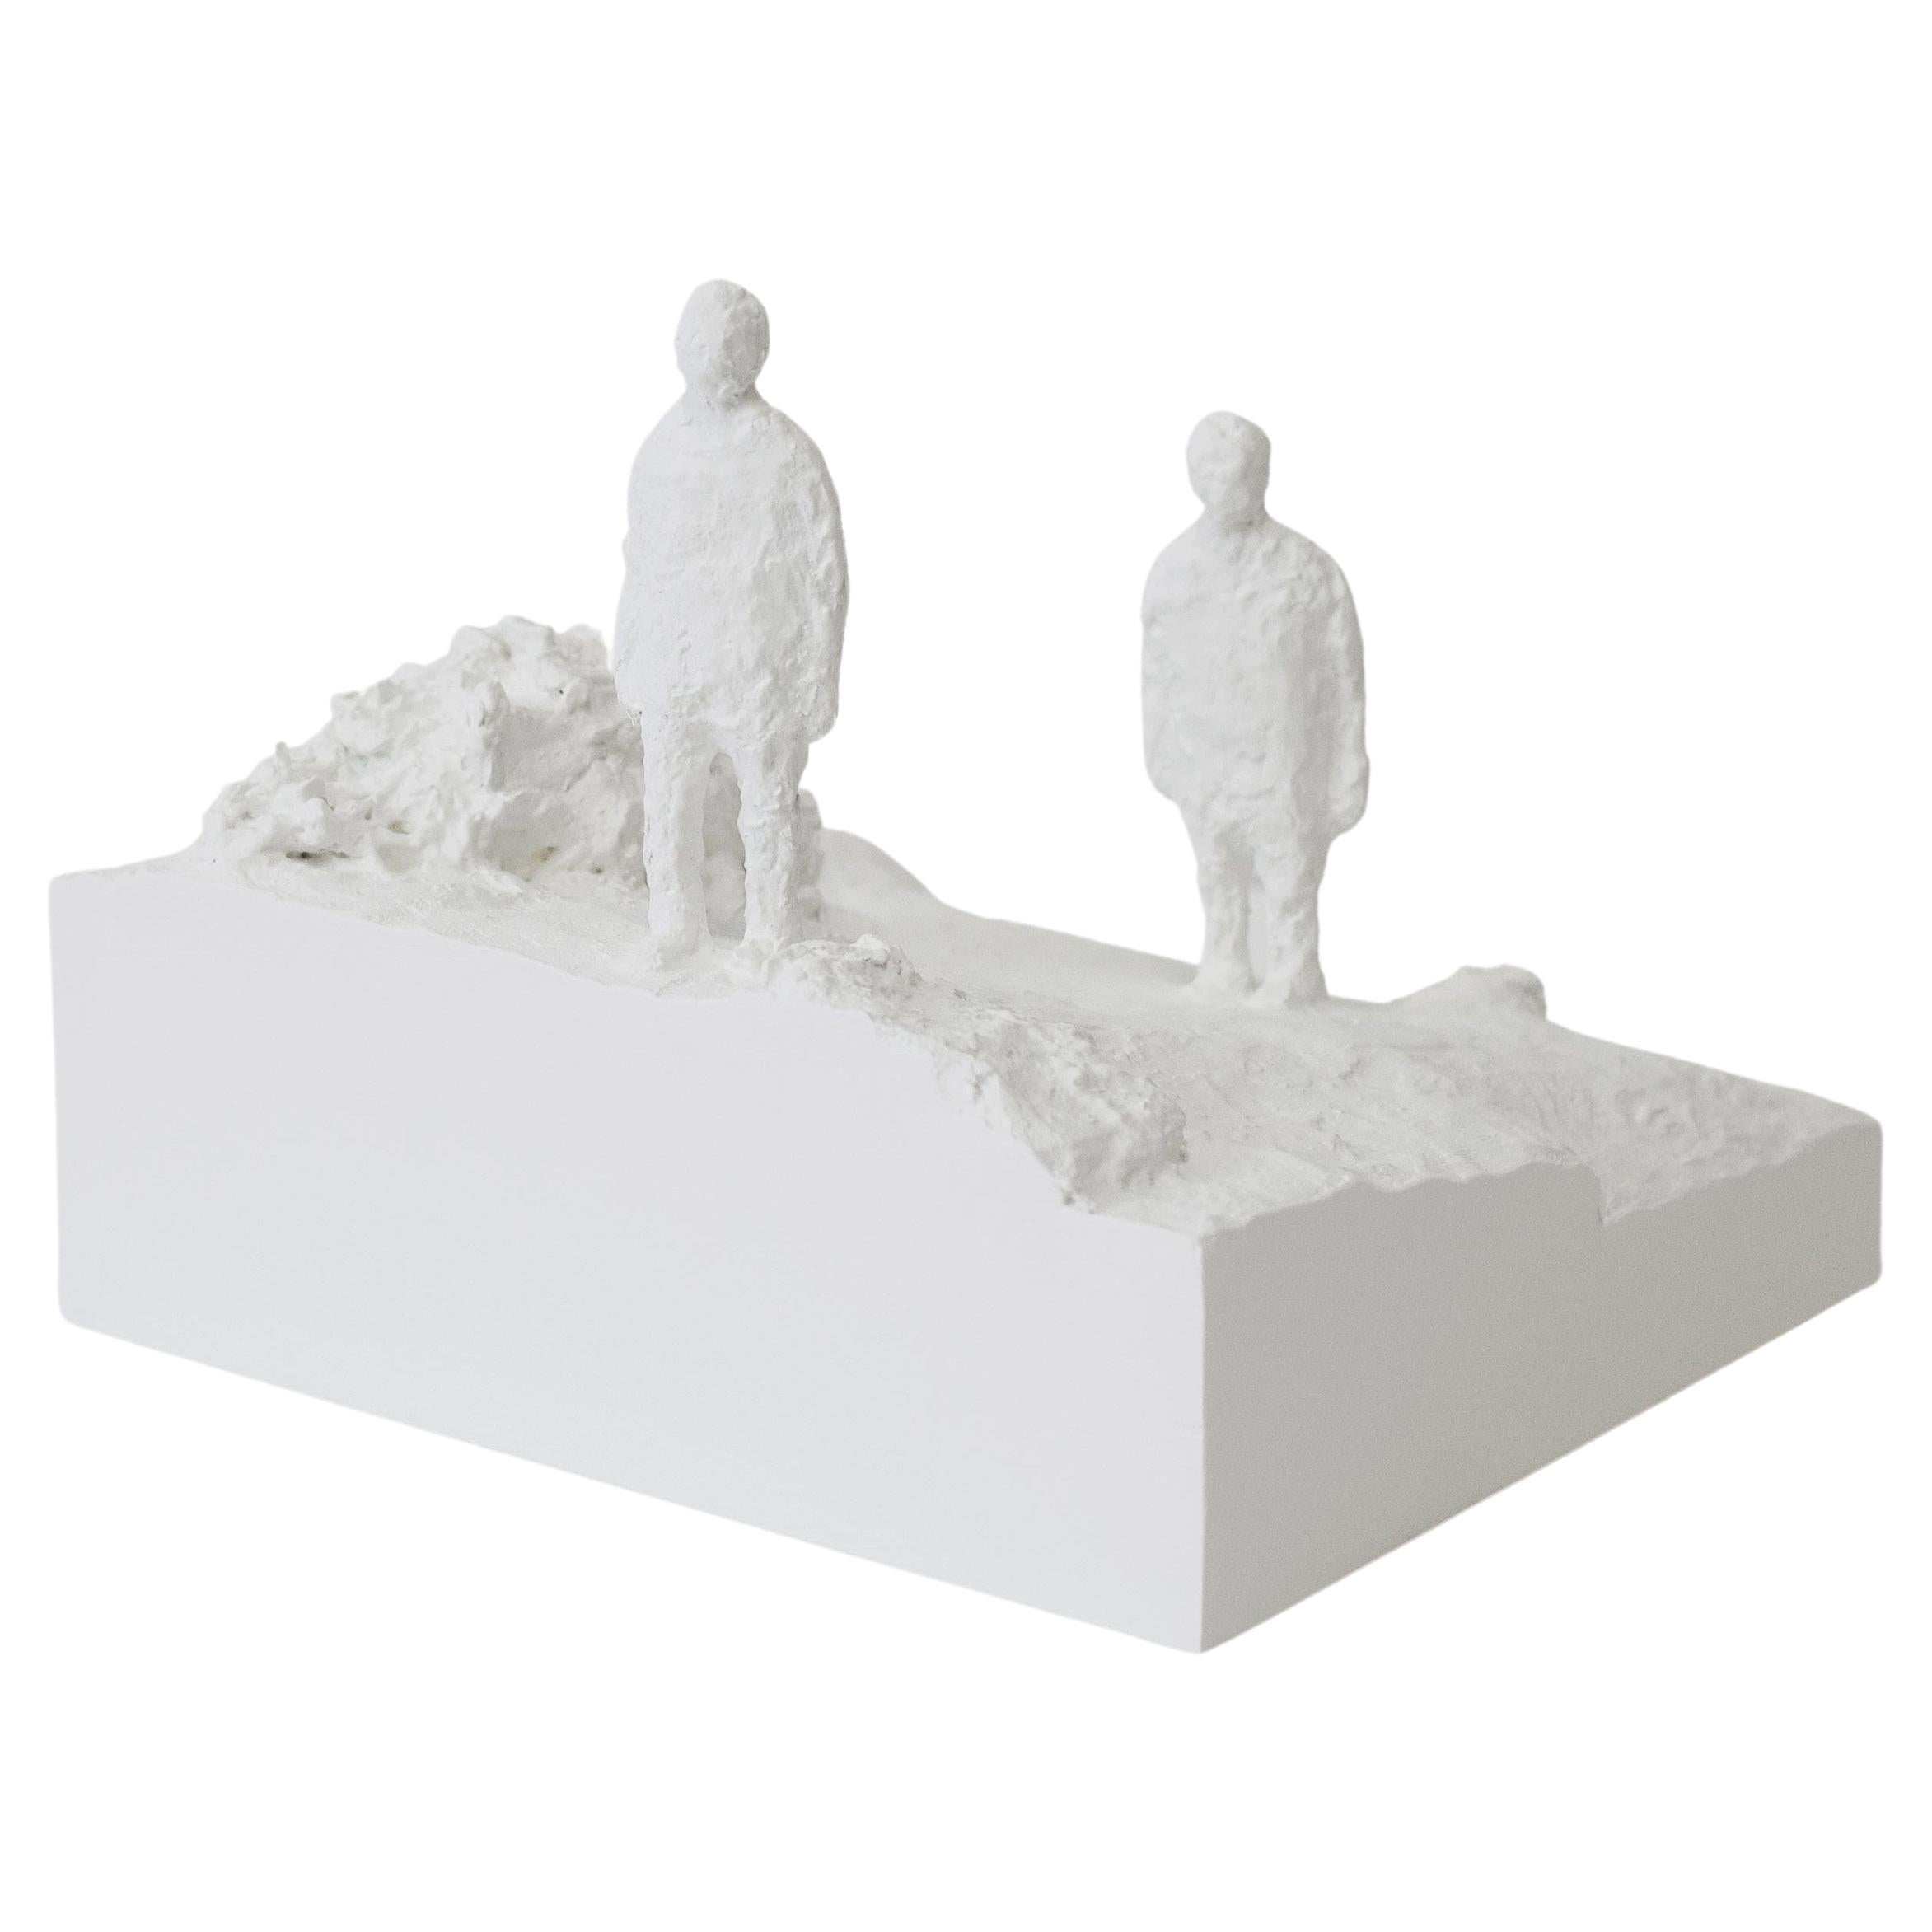 Contemporary Minimalist Art Sculpture Road to the Sea by Egor Plotnikov